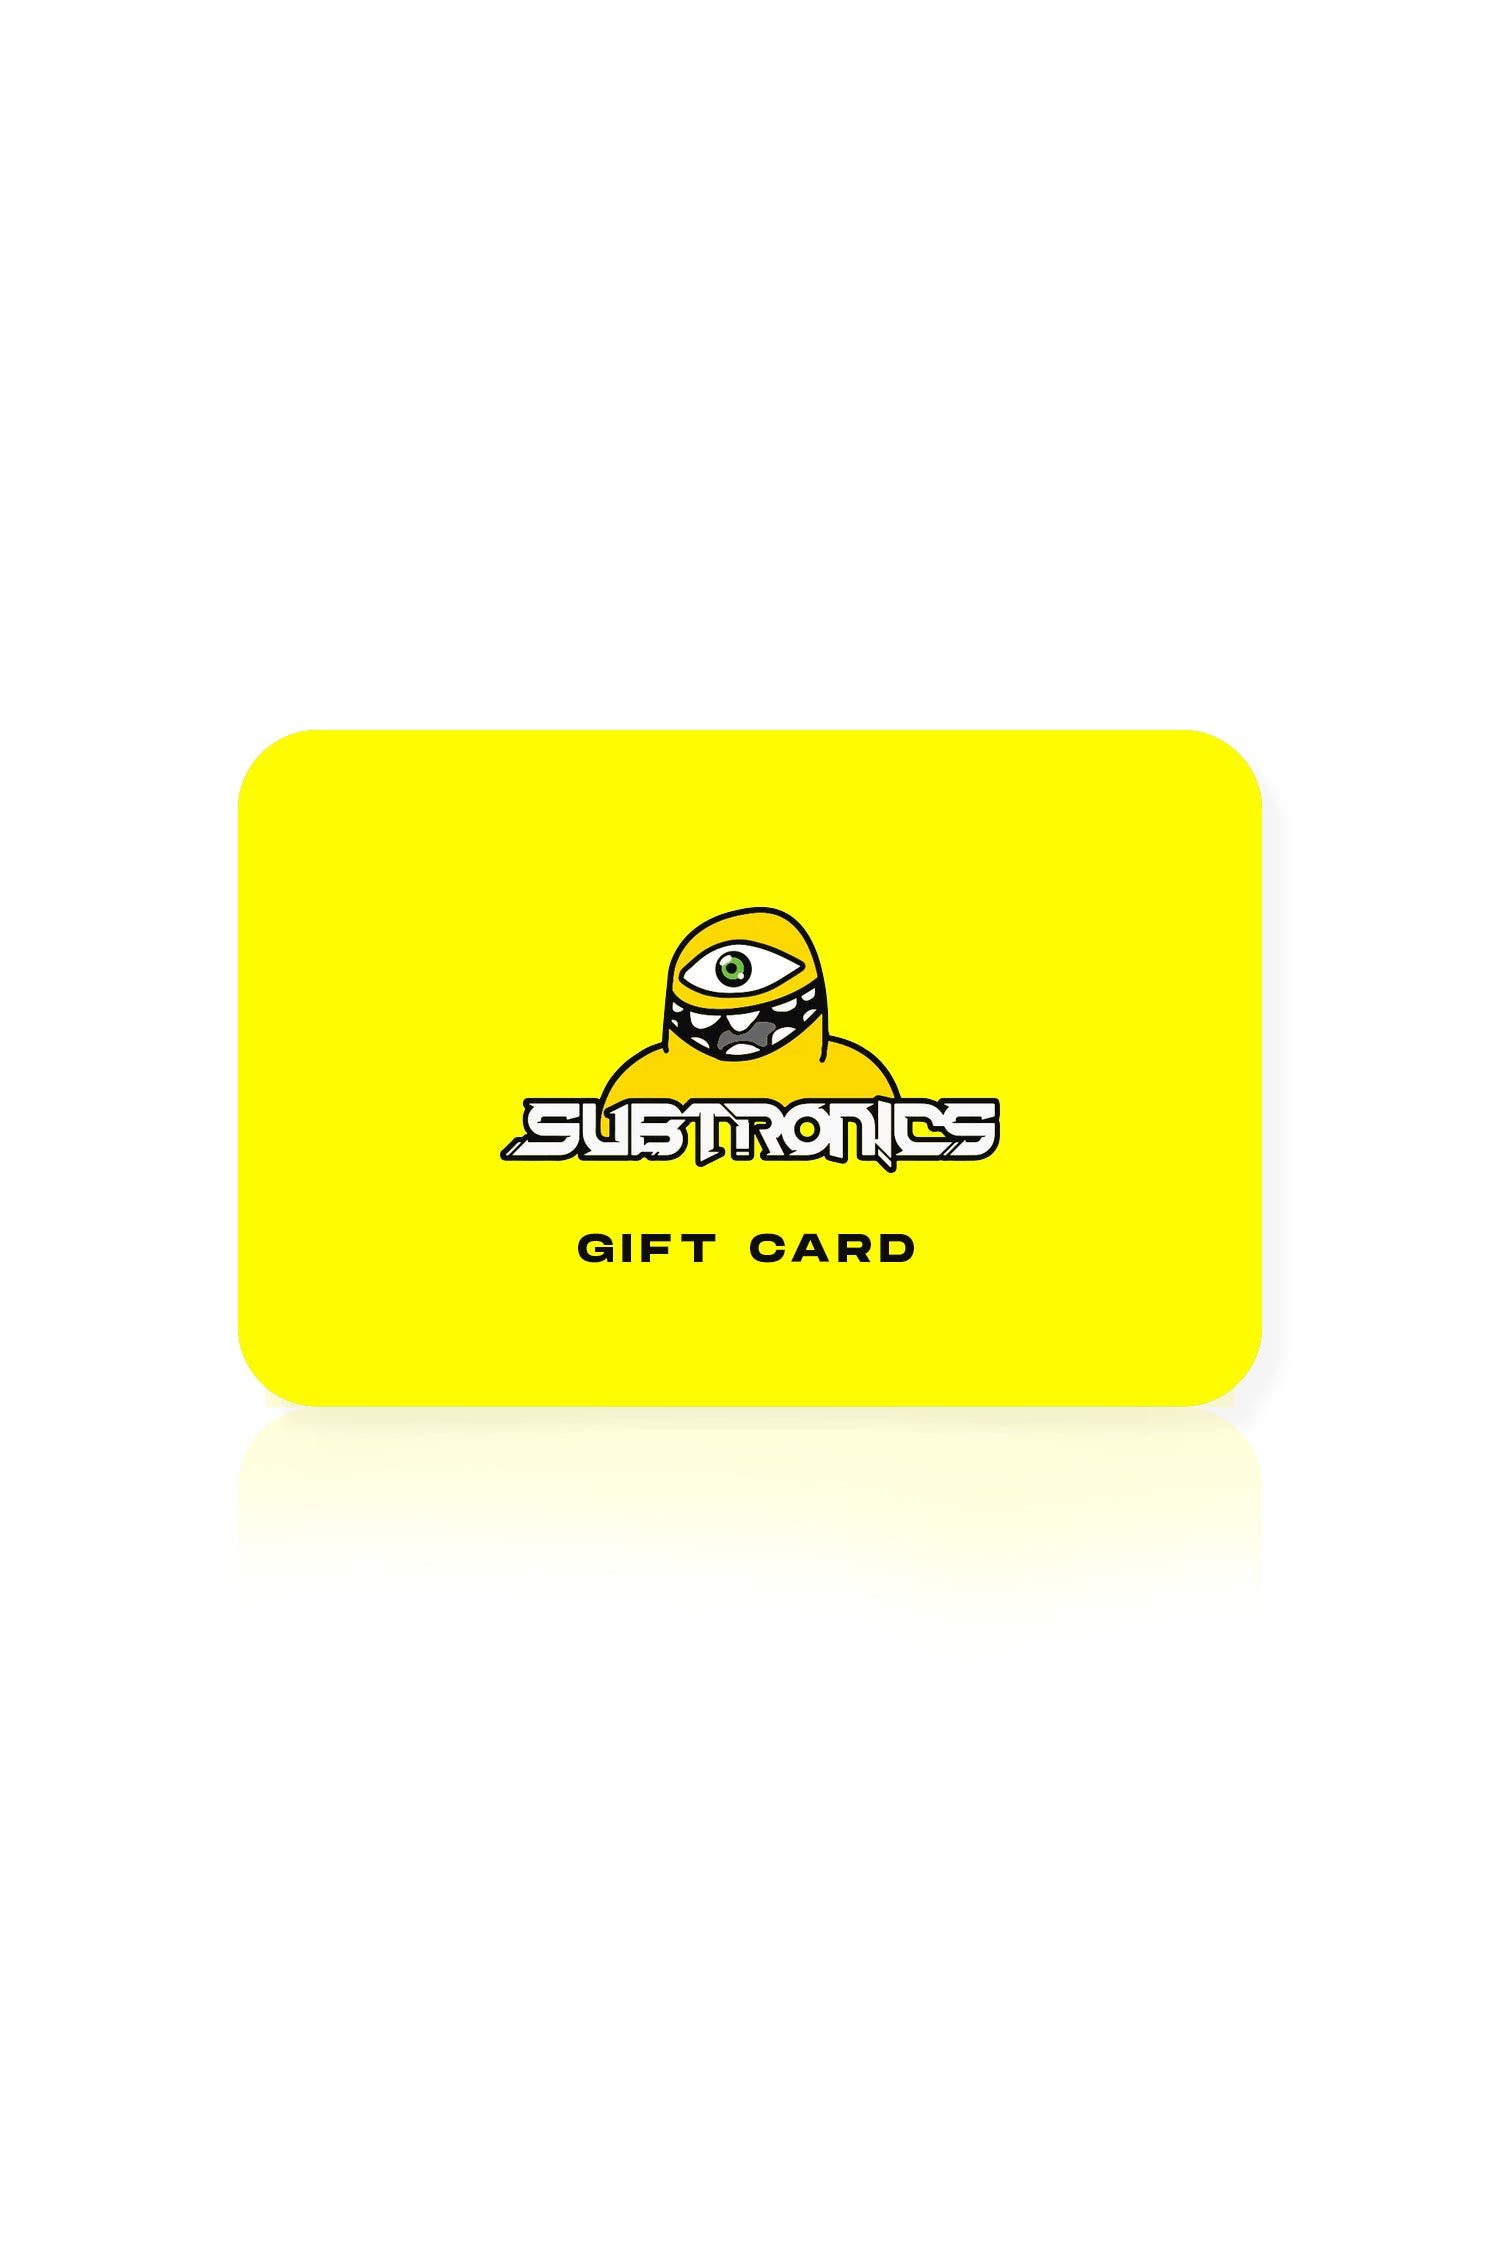 Subtronics Store Gift Card